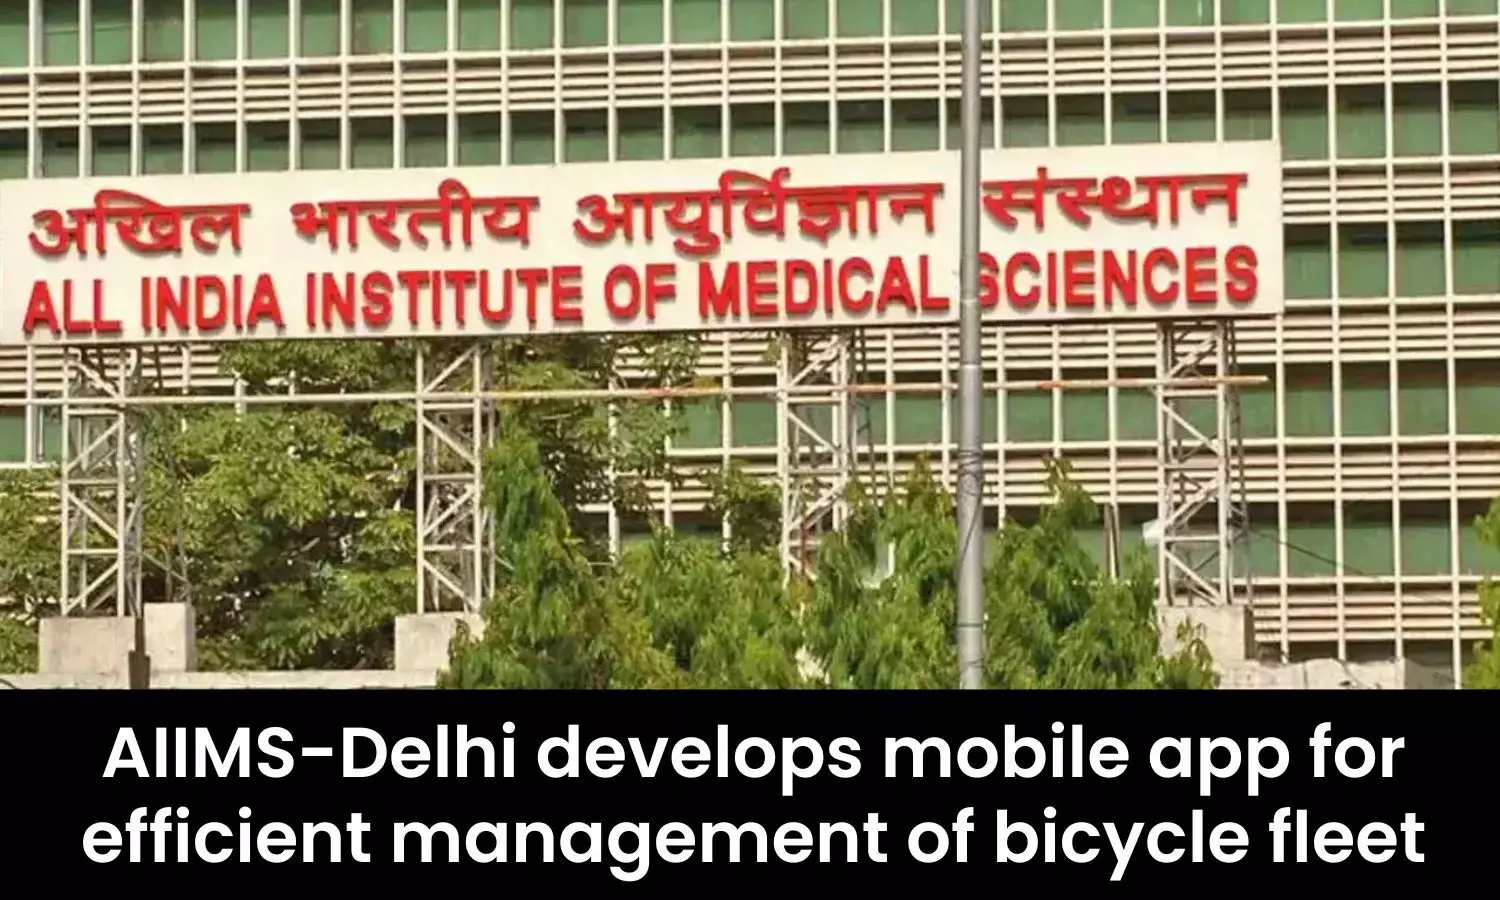 AIIMS Delhi develops mobile app for efficient management of bicycle fleet